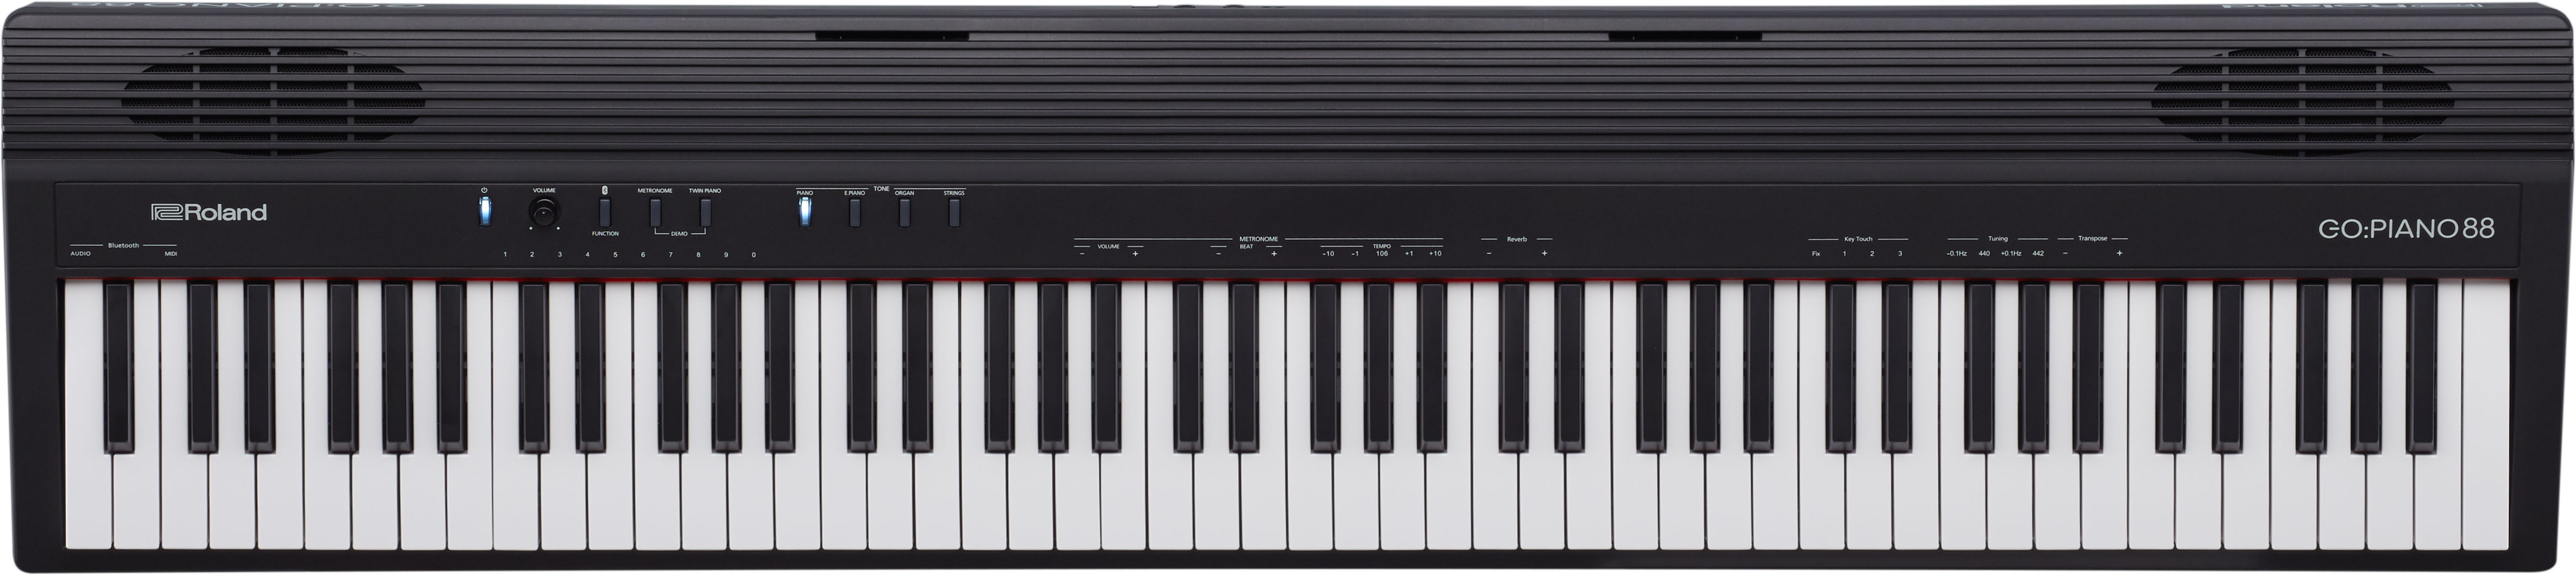 Roland GO:PIANO88 Digital Piano w/ Stand | eBay